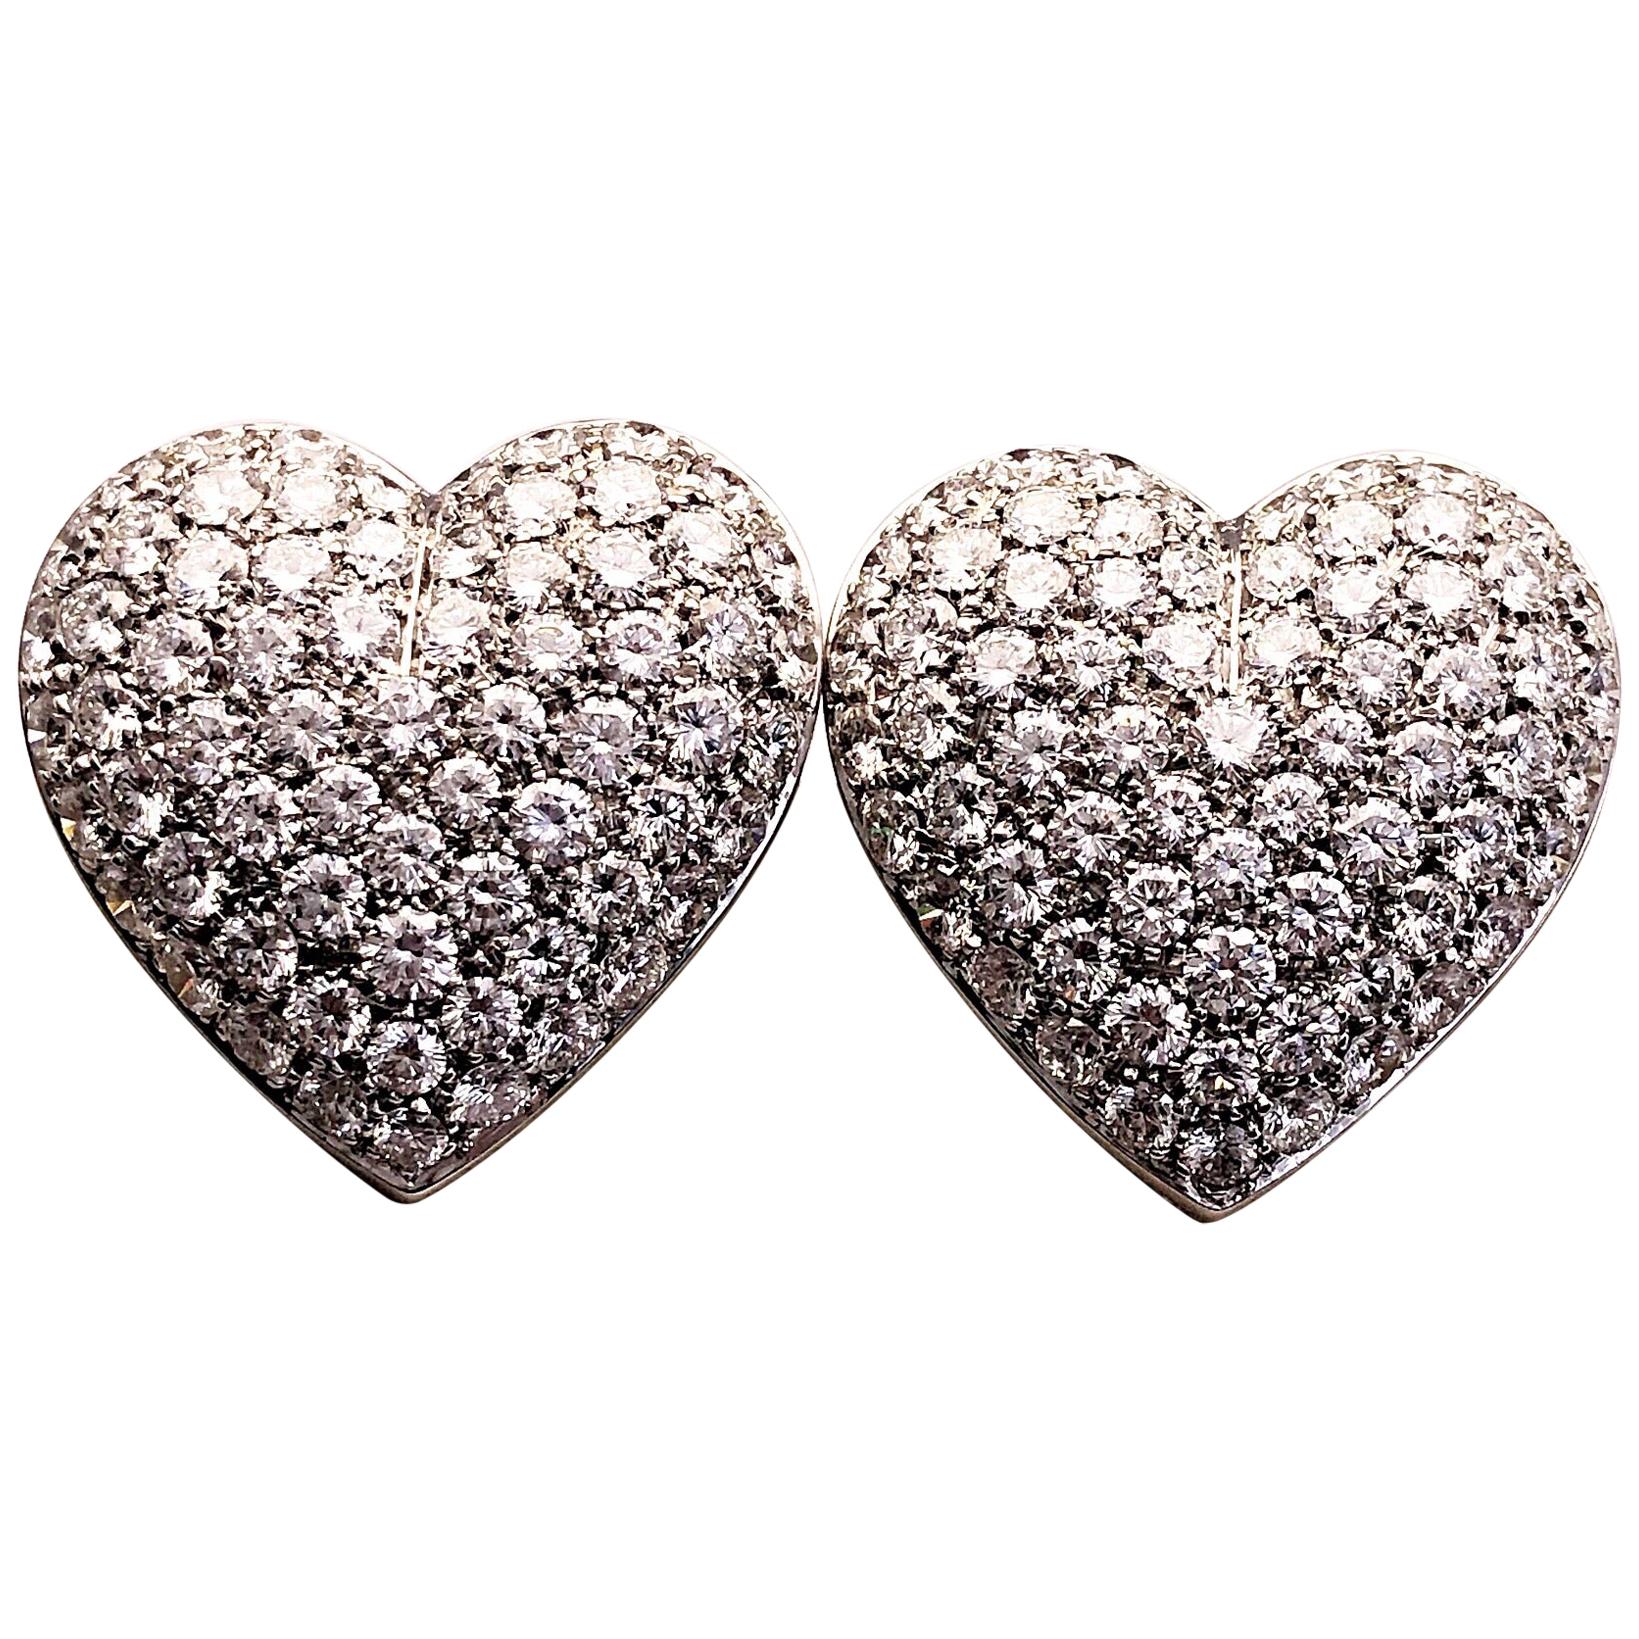 Picchiotti 18 Karat White Gold and 5.37 Carat, Diamond Heart Earrings For Sale